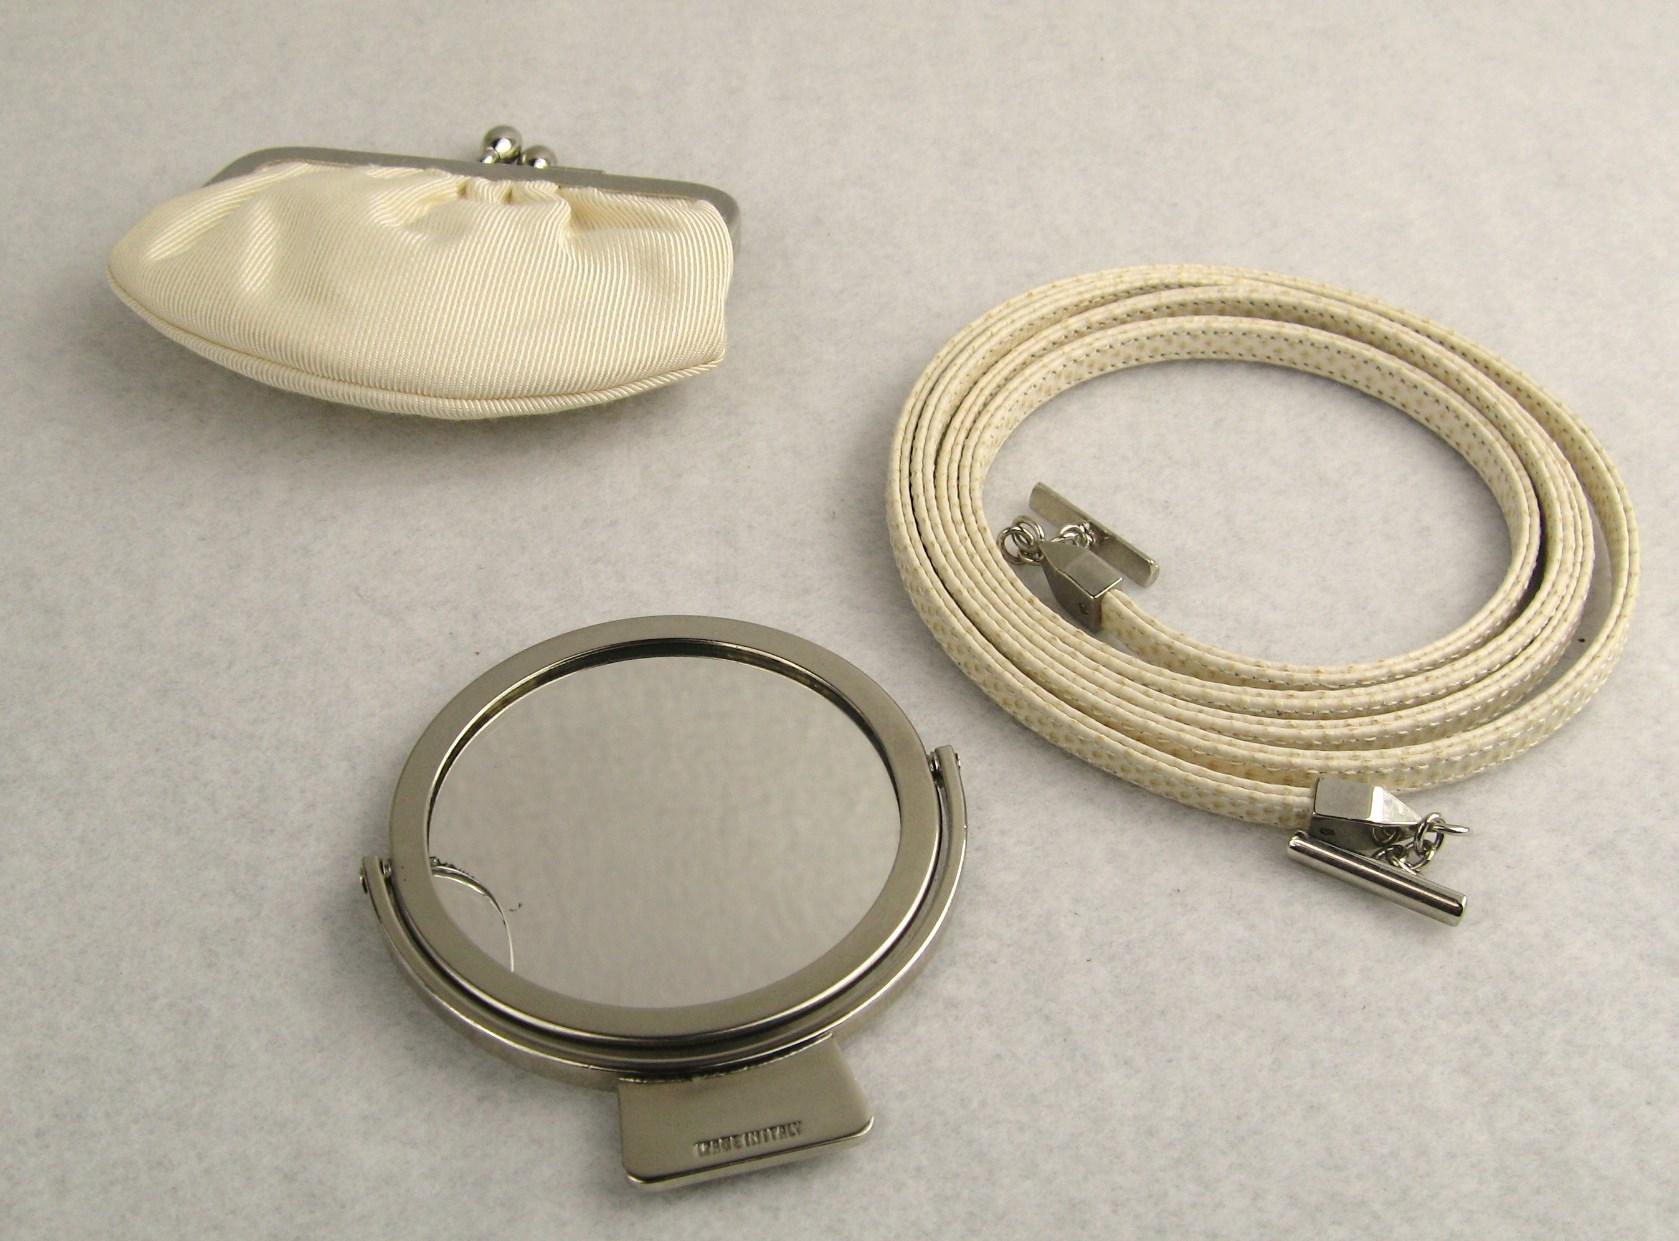 Judith Leiber Lizard Leather Evening Bag Handbag Clutch - Semi - Precious Stones For Sale 4